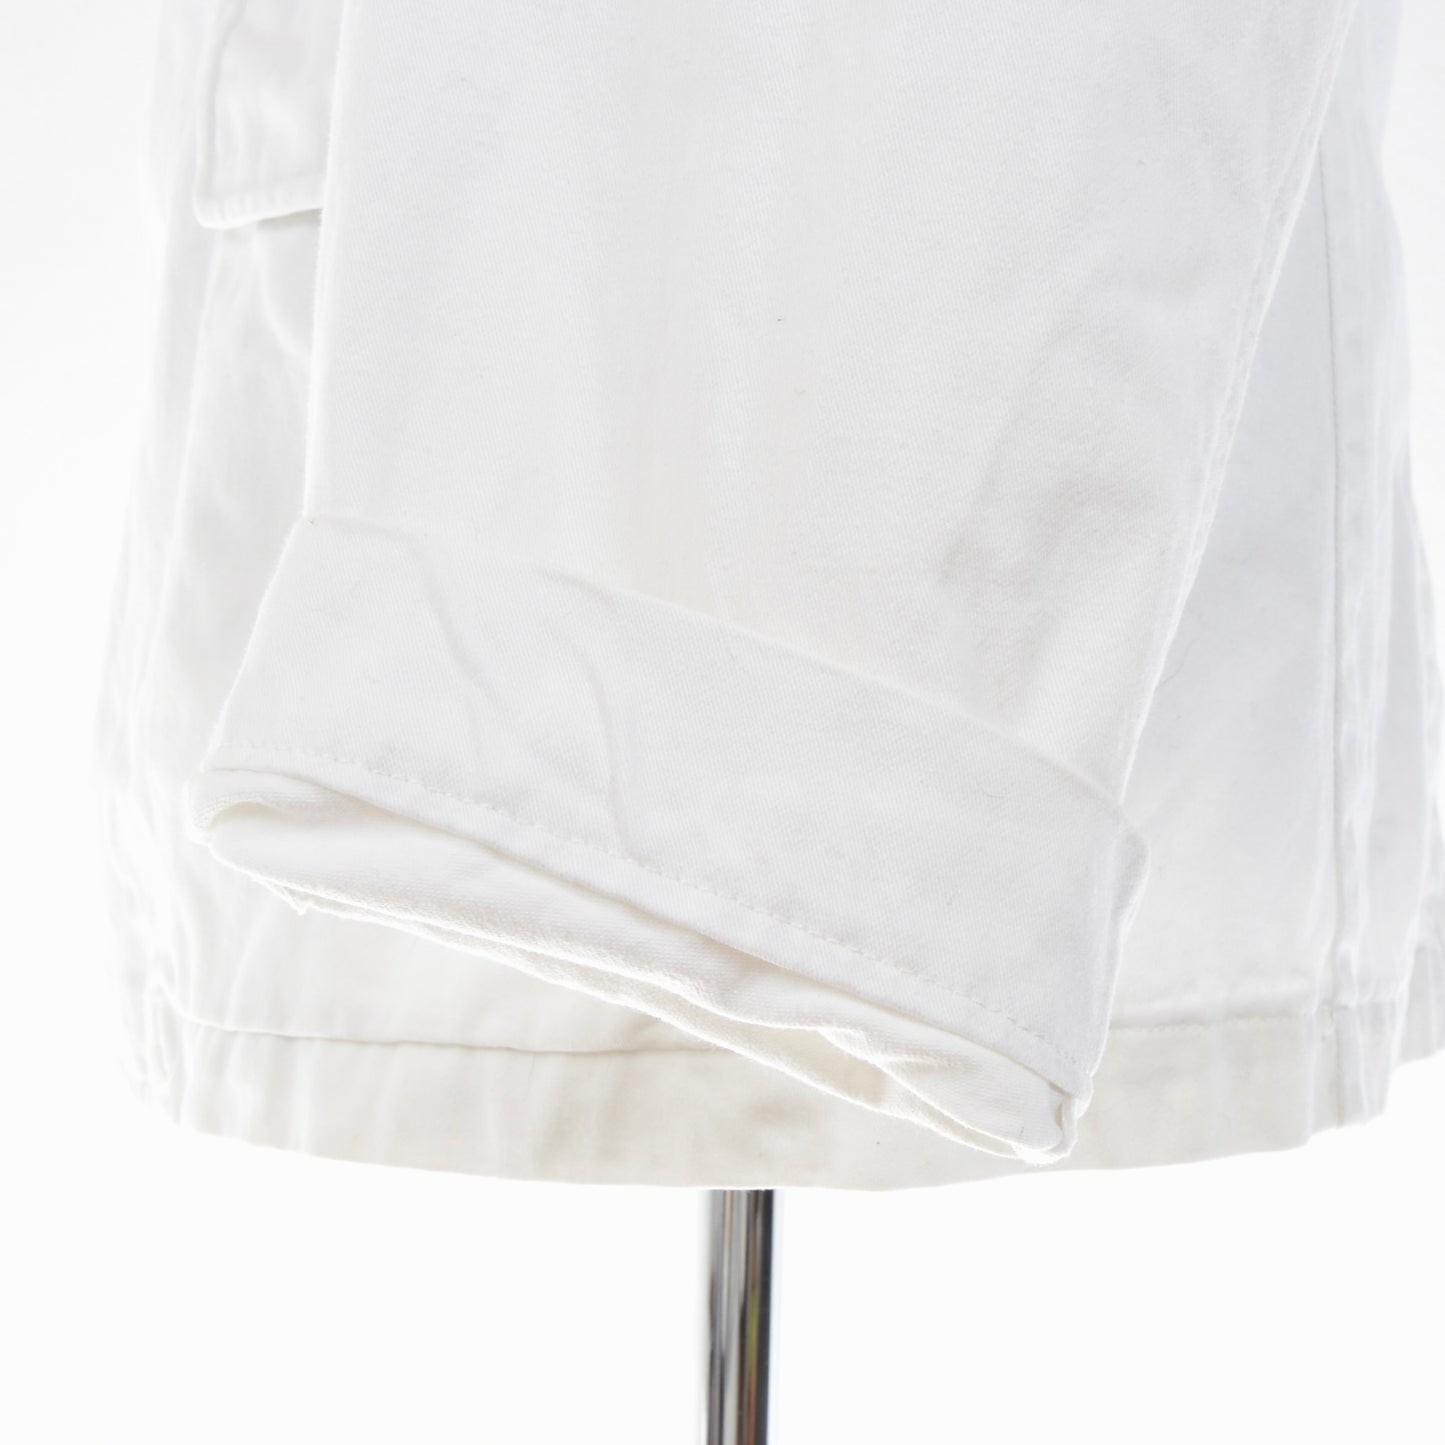 Dries Van Noten Vintage Jacket Size 48 - White